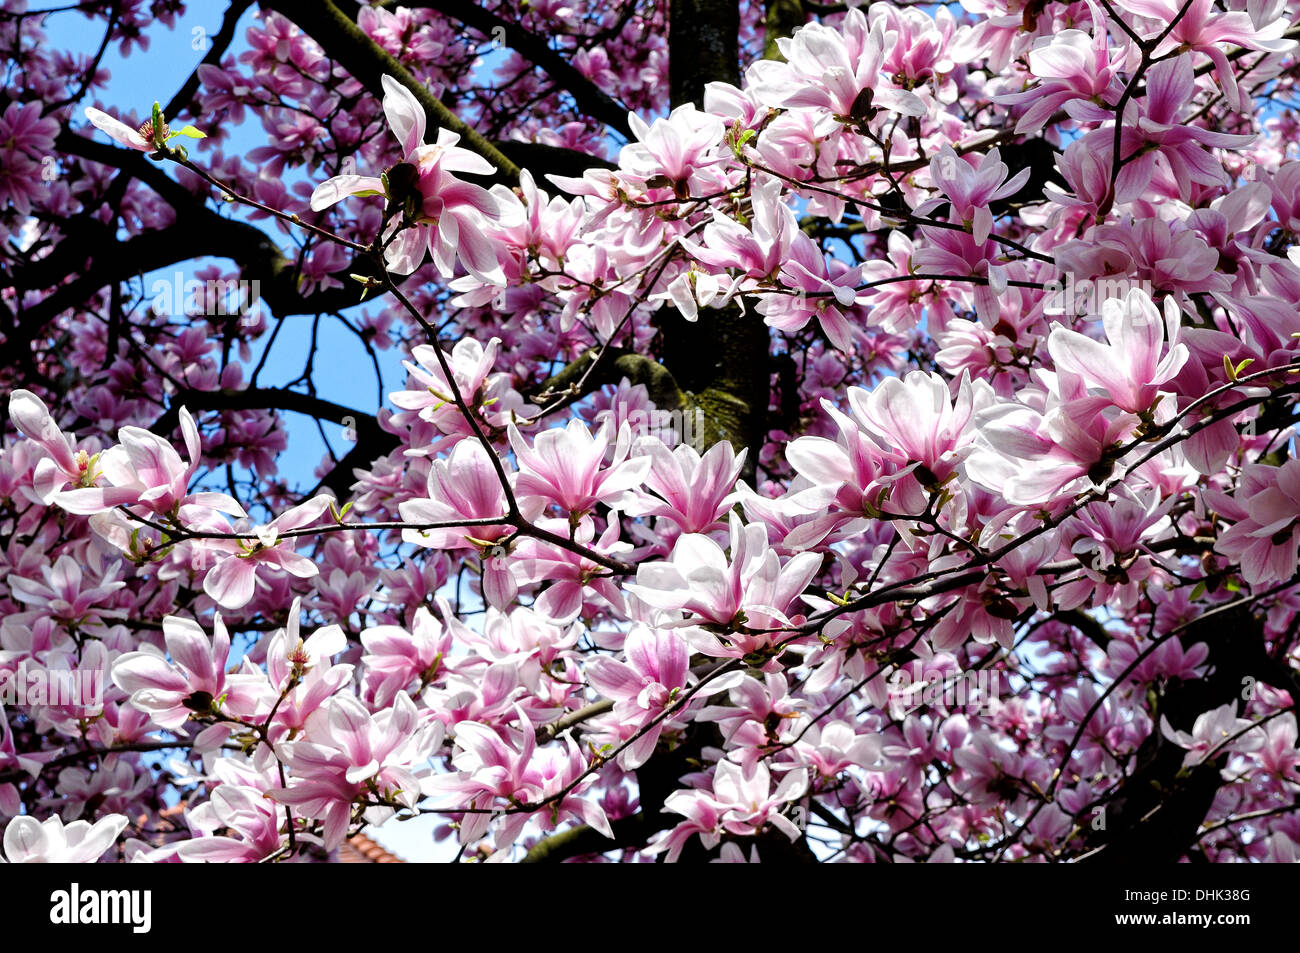 Flowers of the magnolia tree Stock Photo